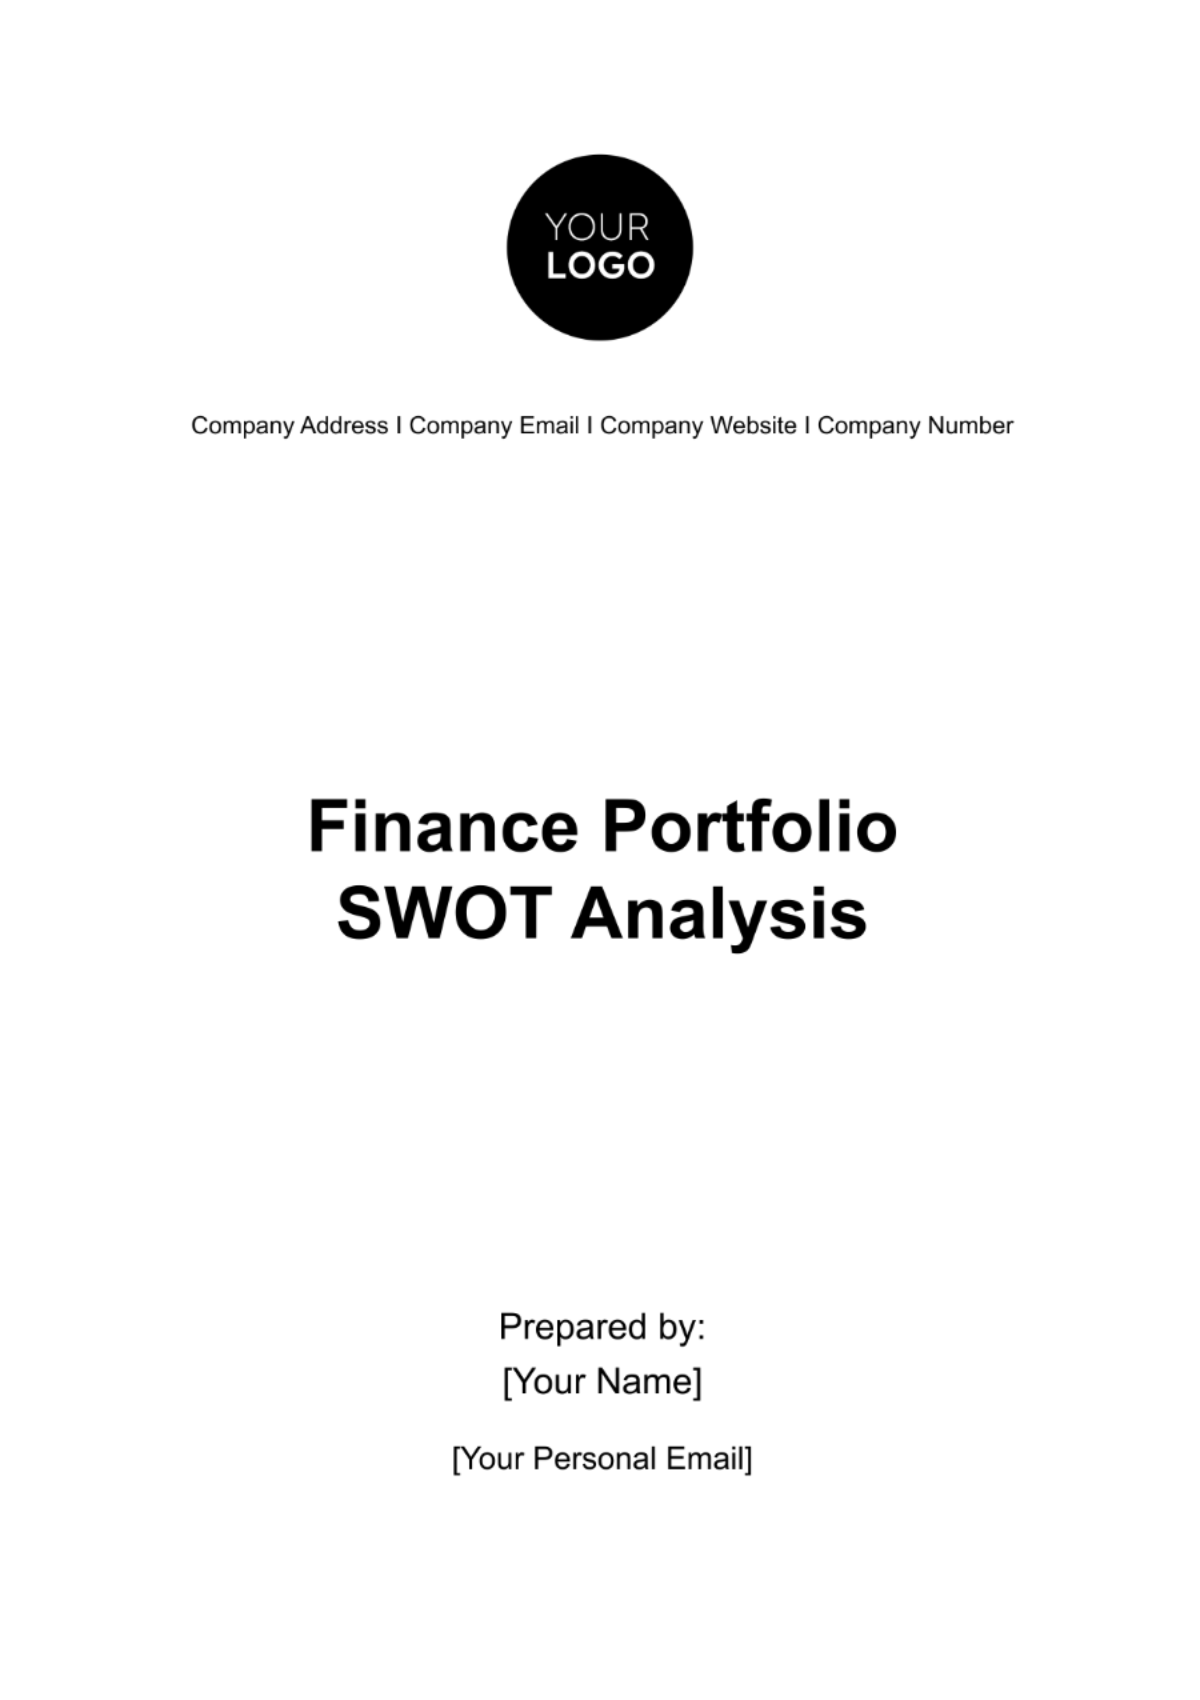 Finance Portfolio SWOT Analysis Template